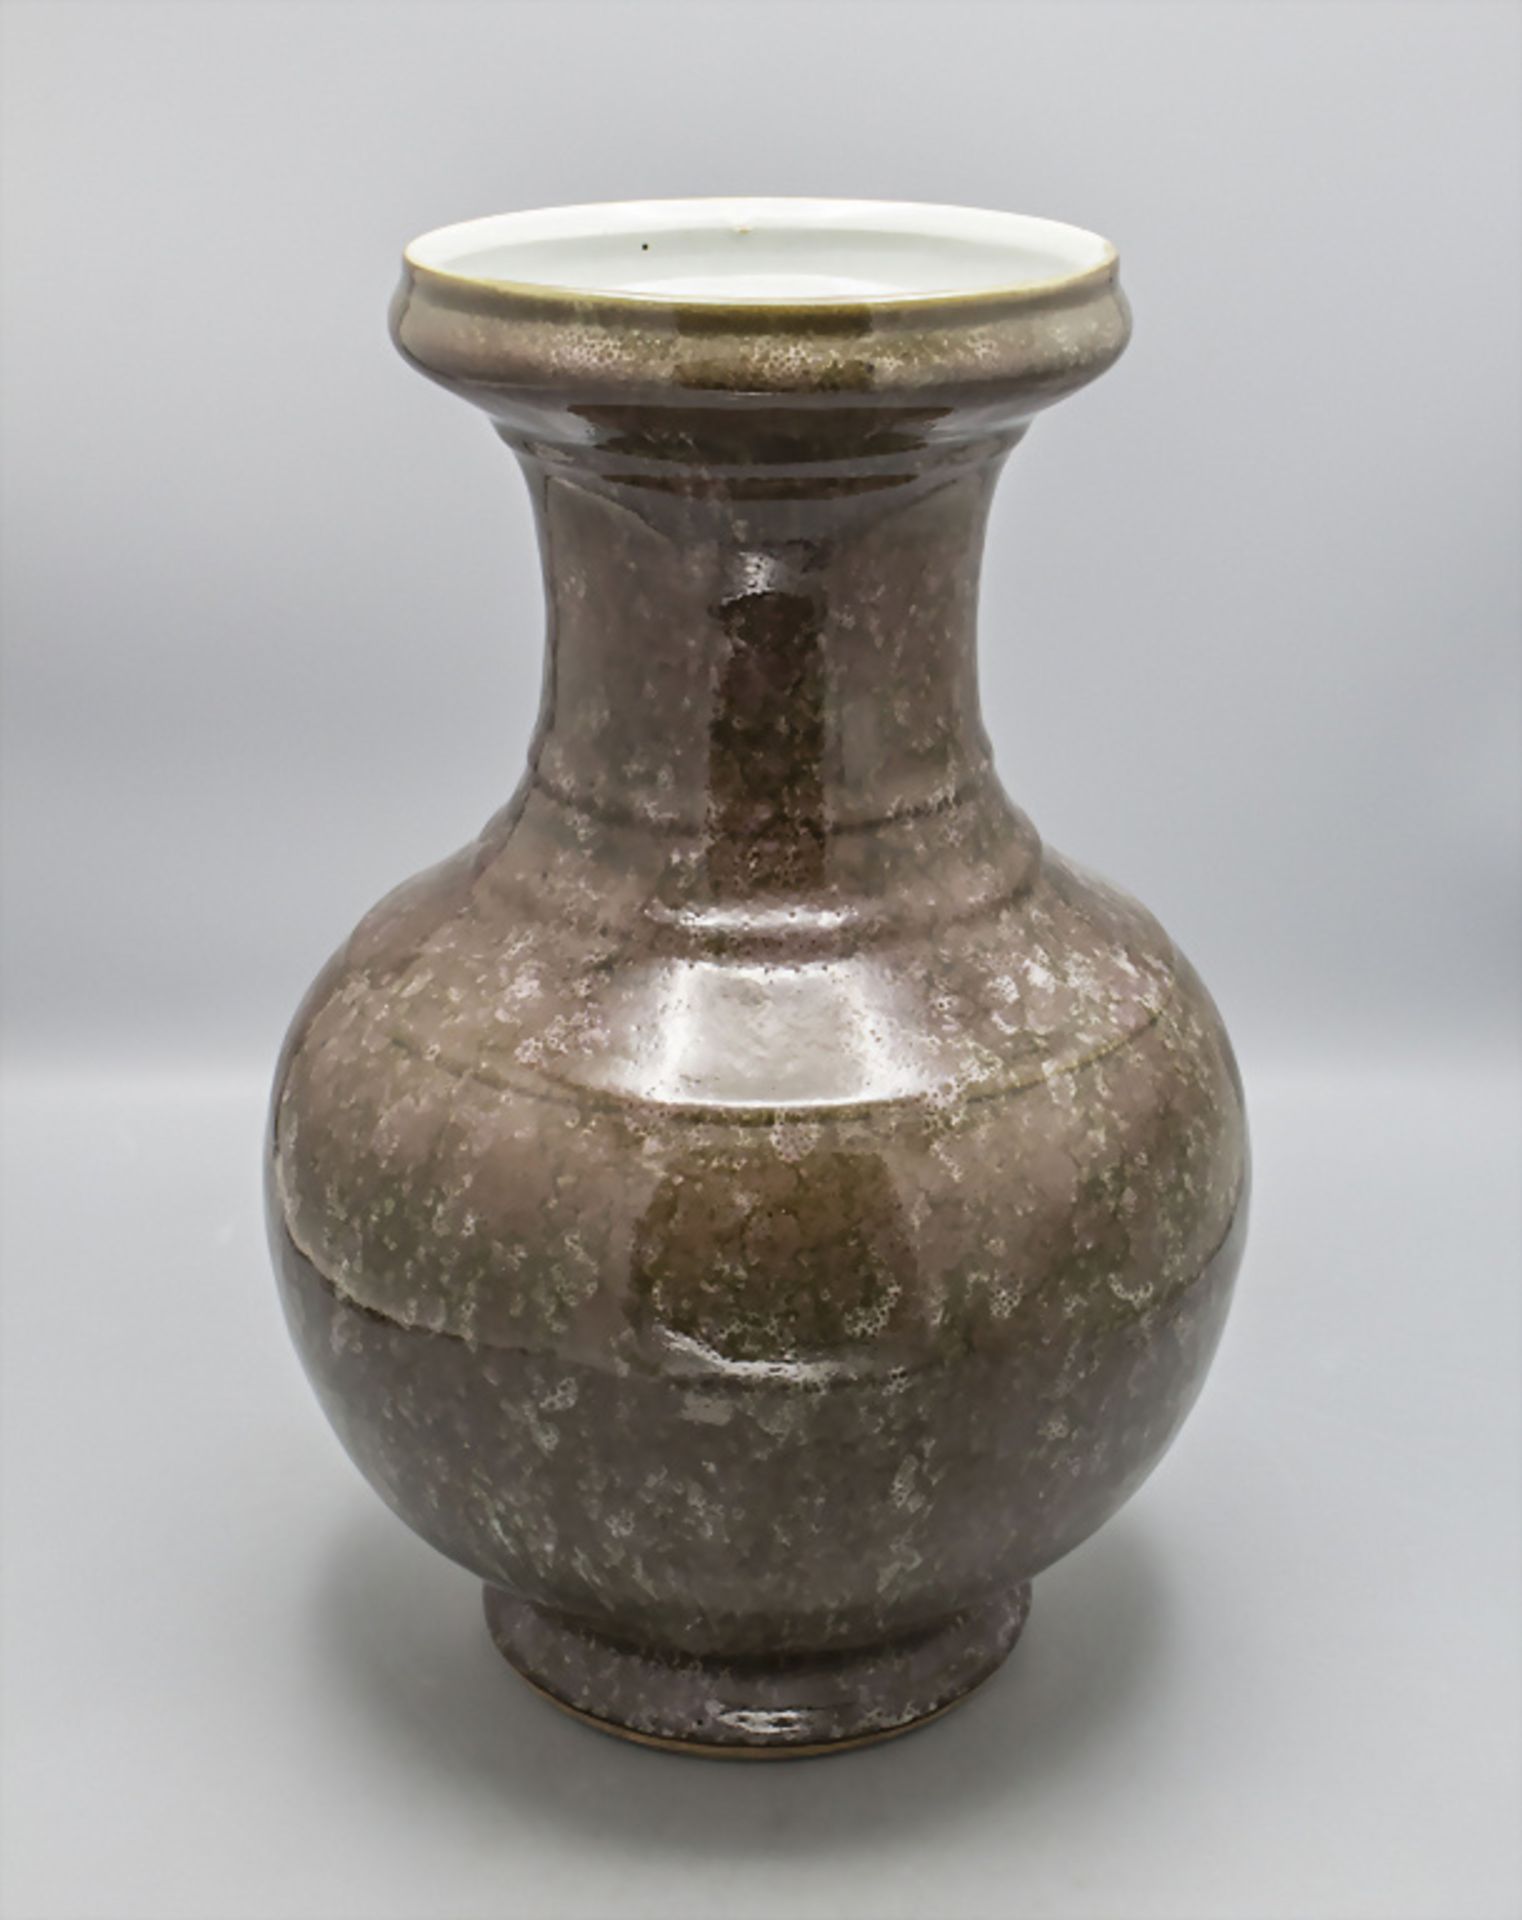 Seltene Vase / A rare porcelain vase, China, Qing Dynastie (1644-1911), gemarkt Kangxi (1662-1722)